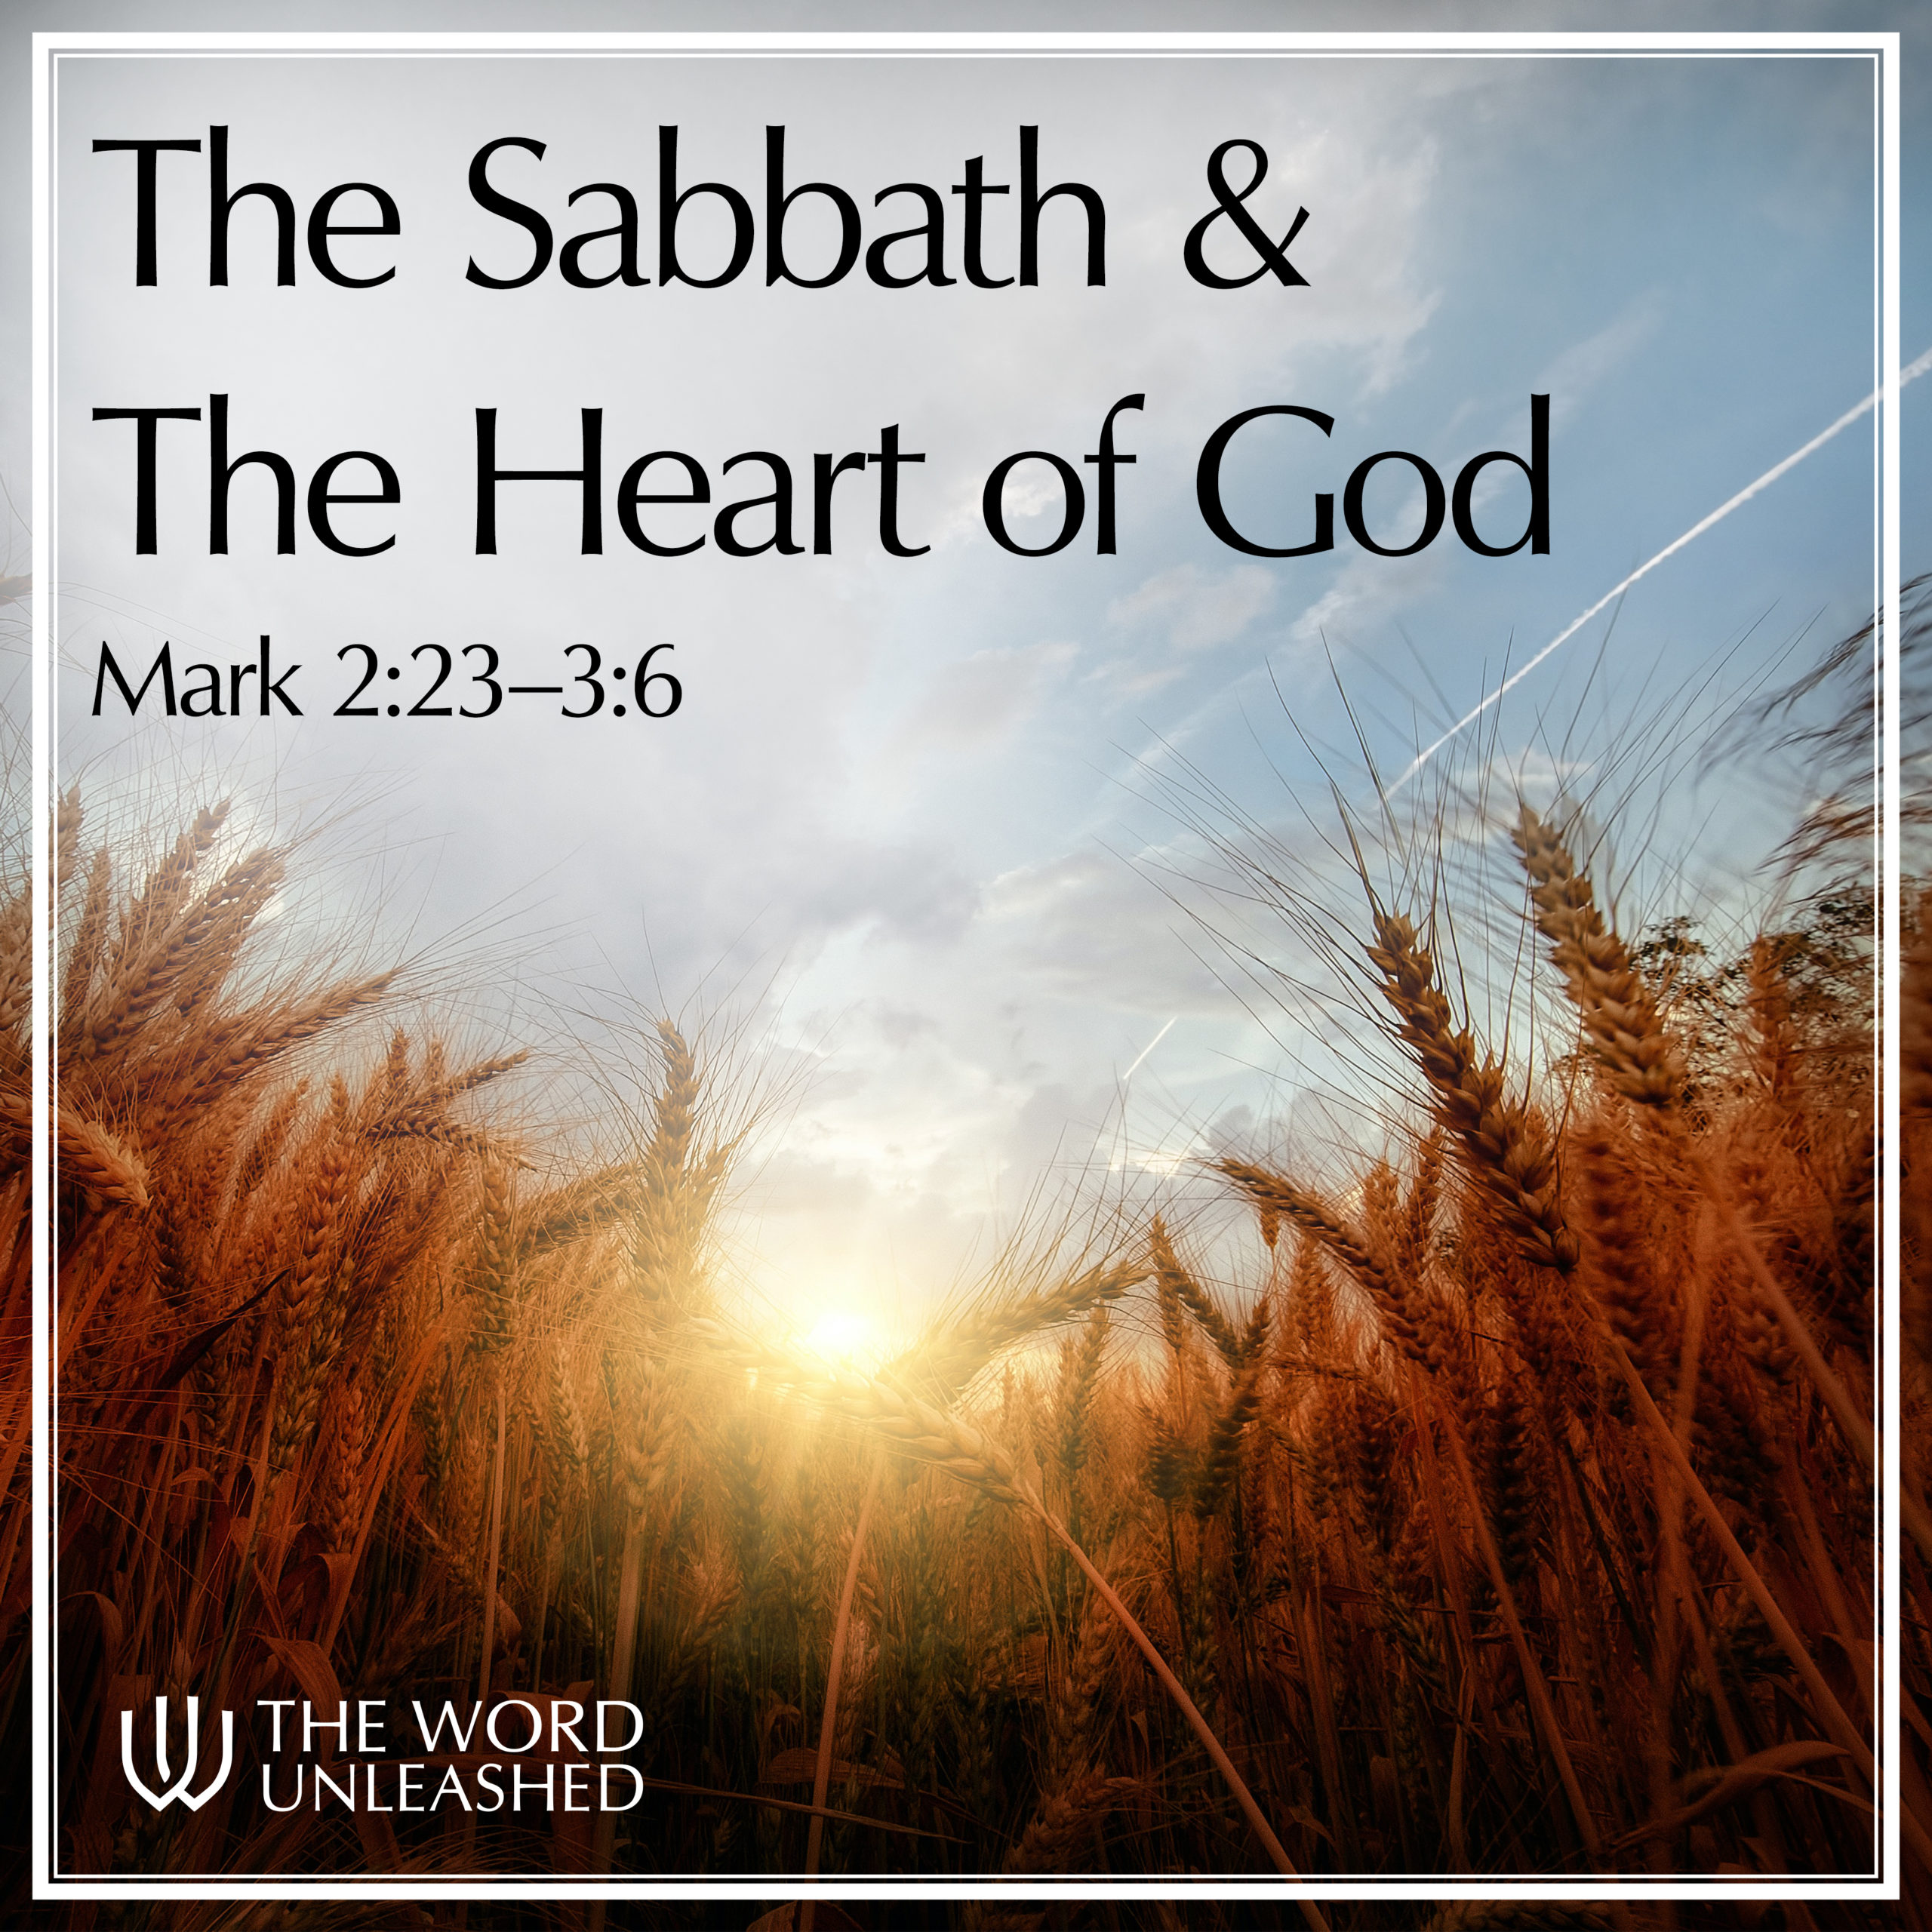 The Sabbath & the Heart of God